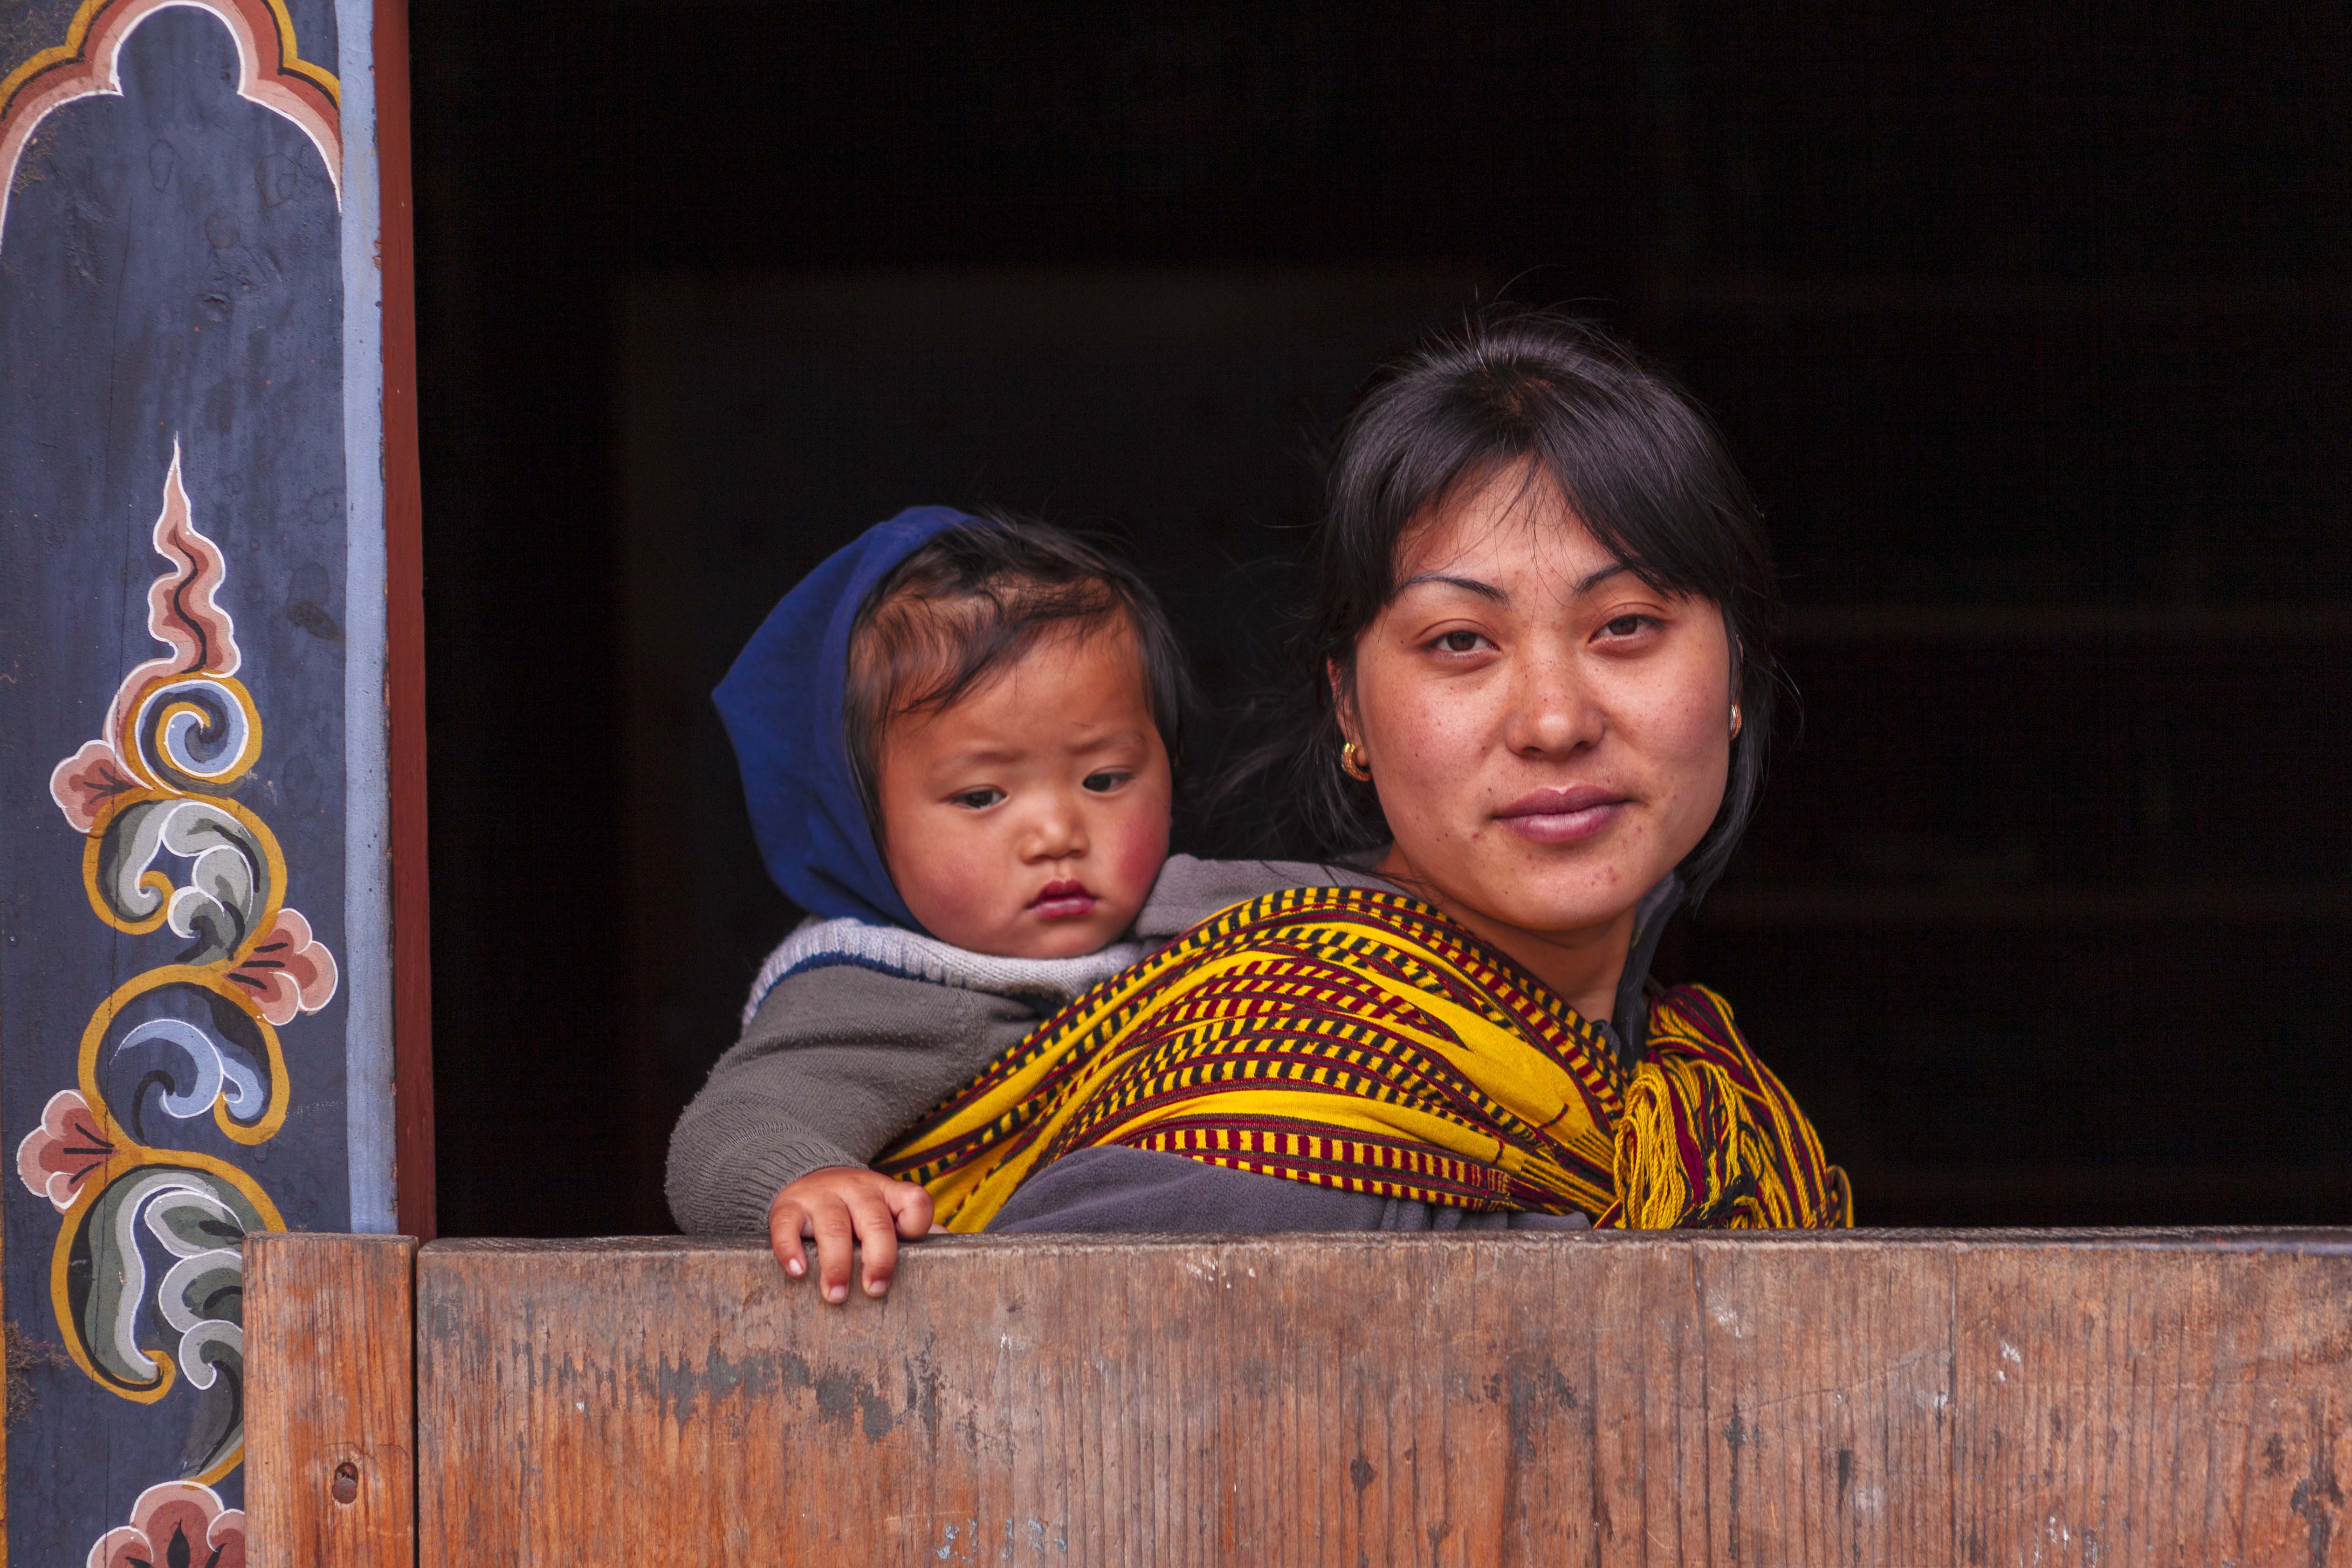 Mother and Child Bhutan, copyright © Joe Whittington